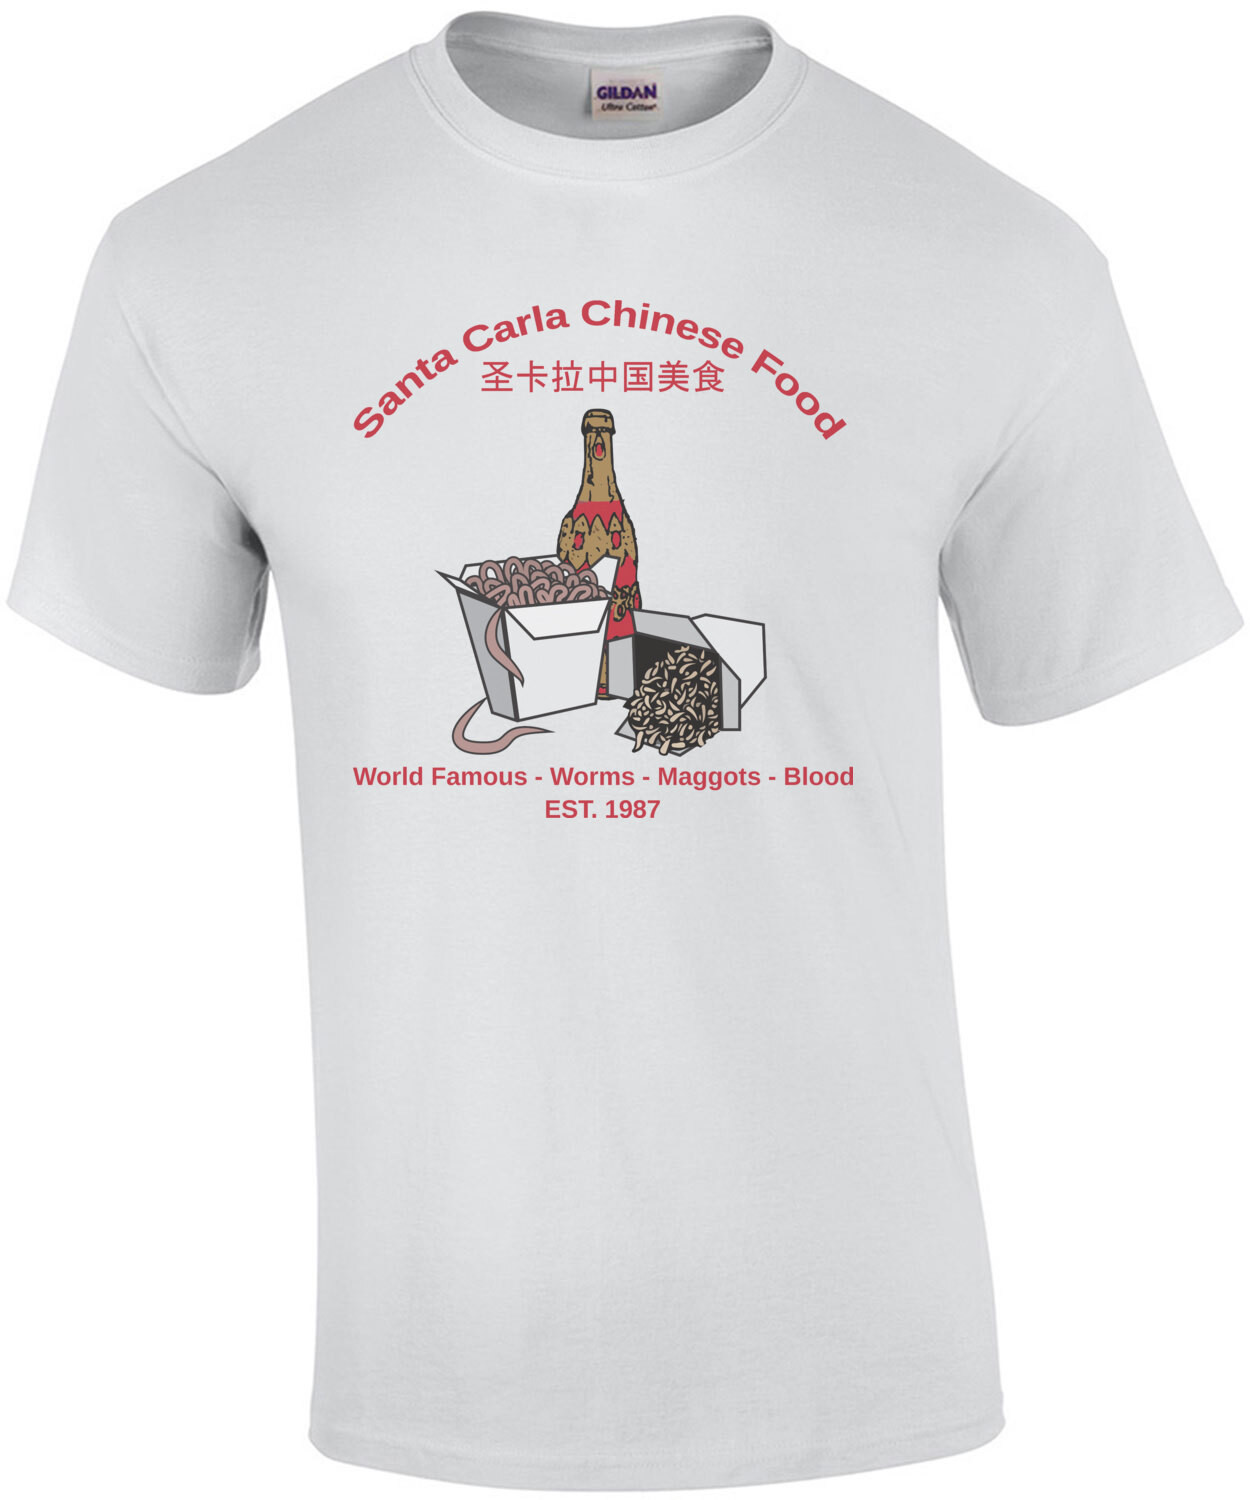 Santa Carla Chinese Food - Worms - Maggots - Blood - The Lost Boys - 80's T-Shirt